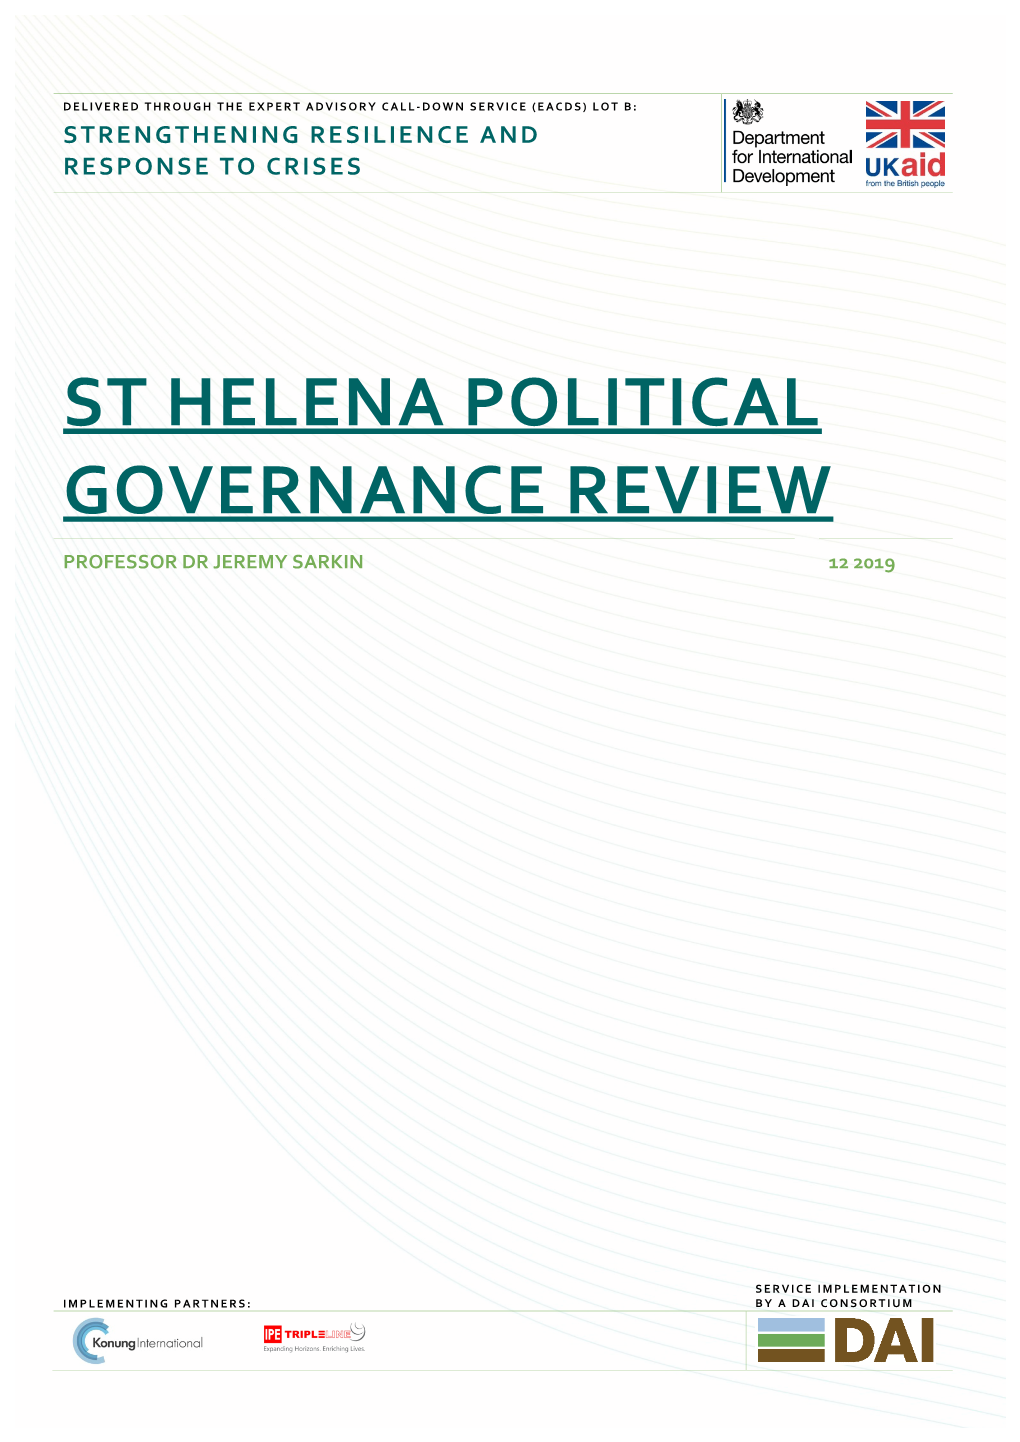 St Helena Political Governance Review